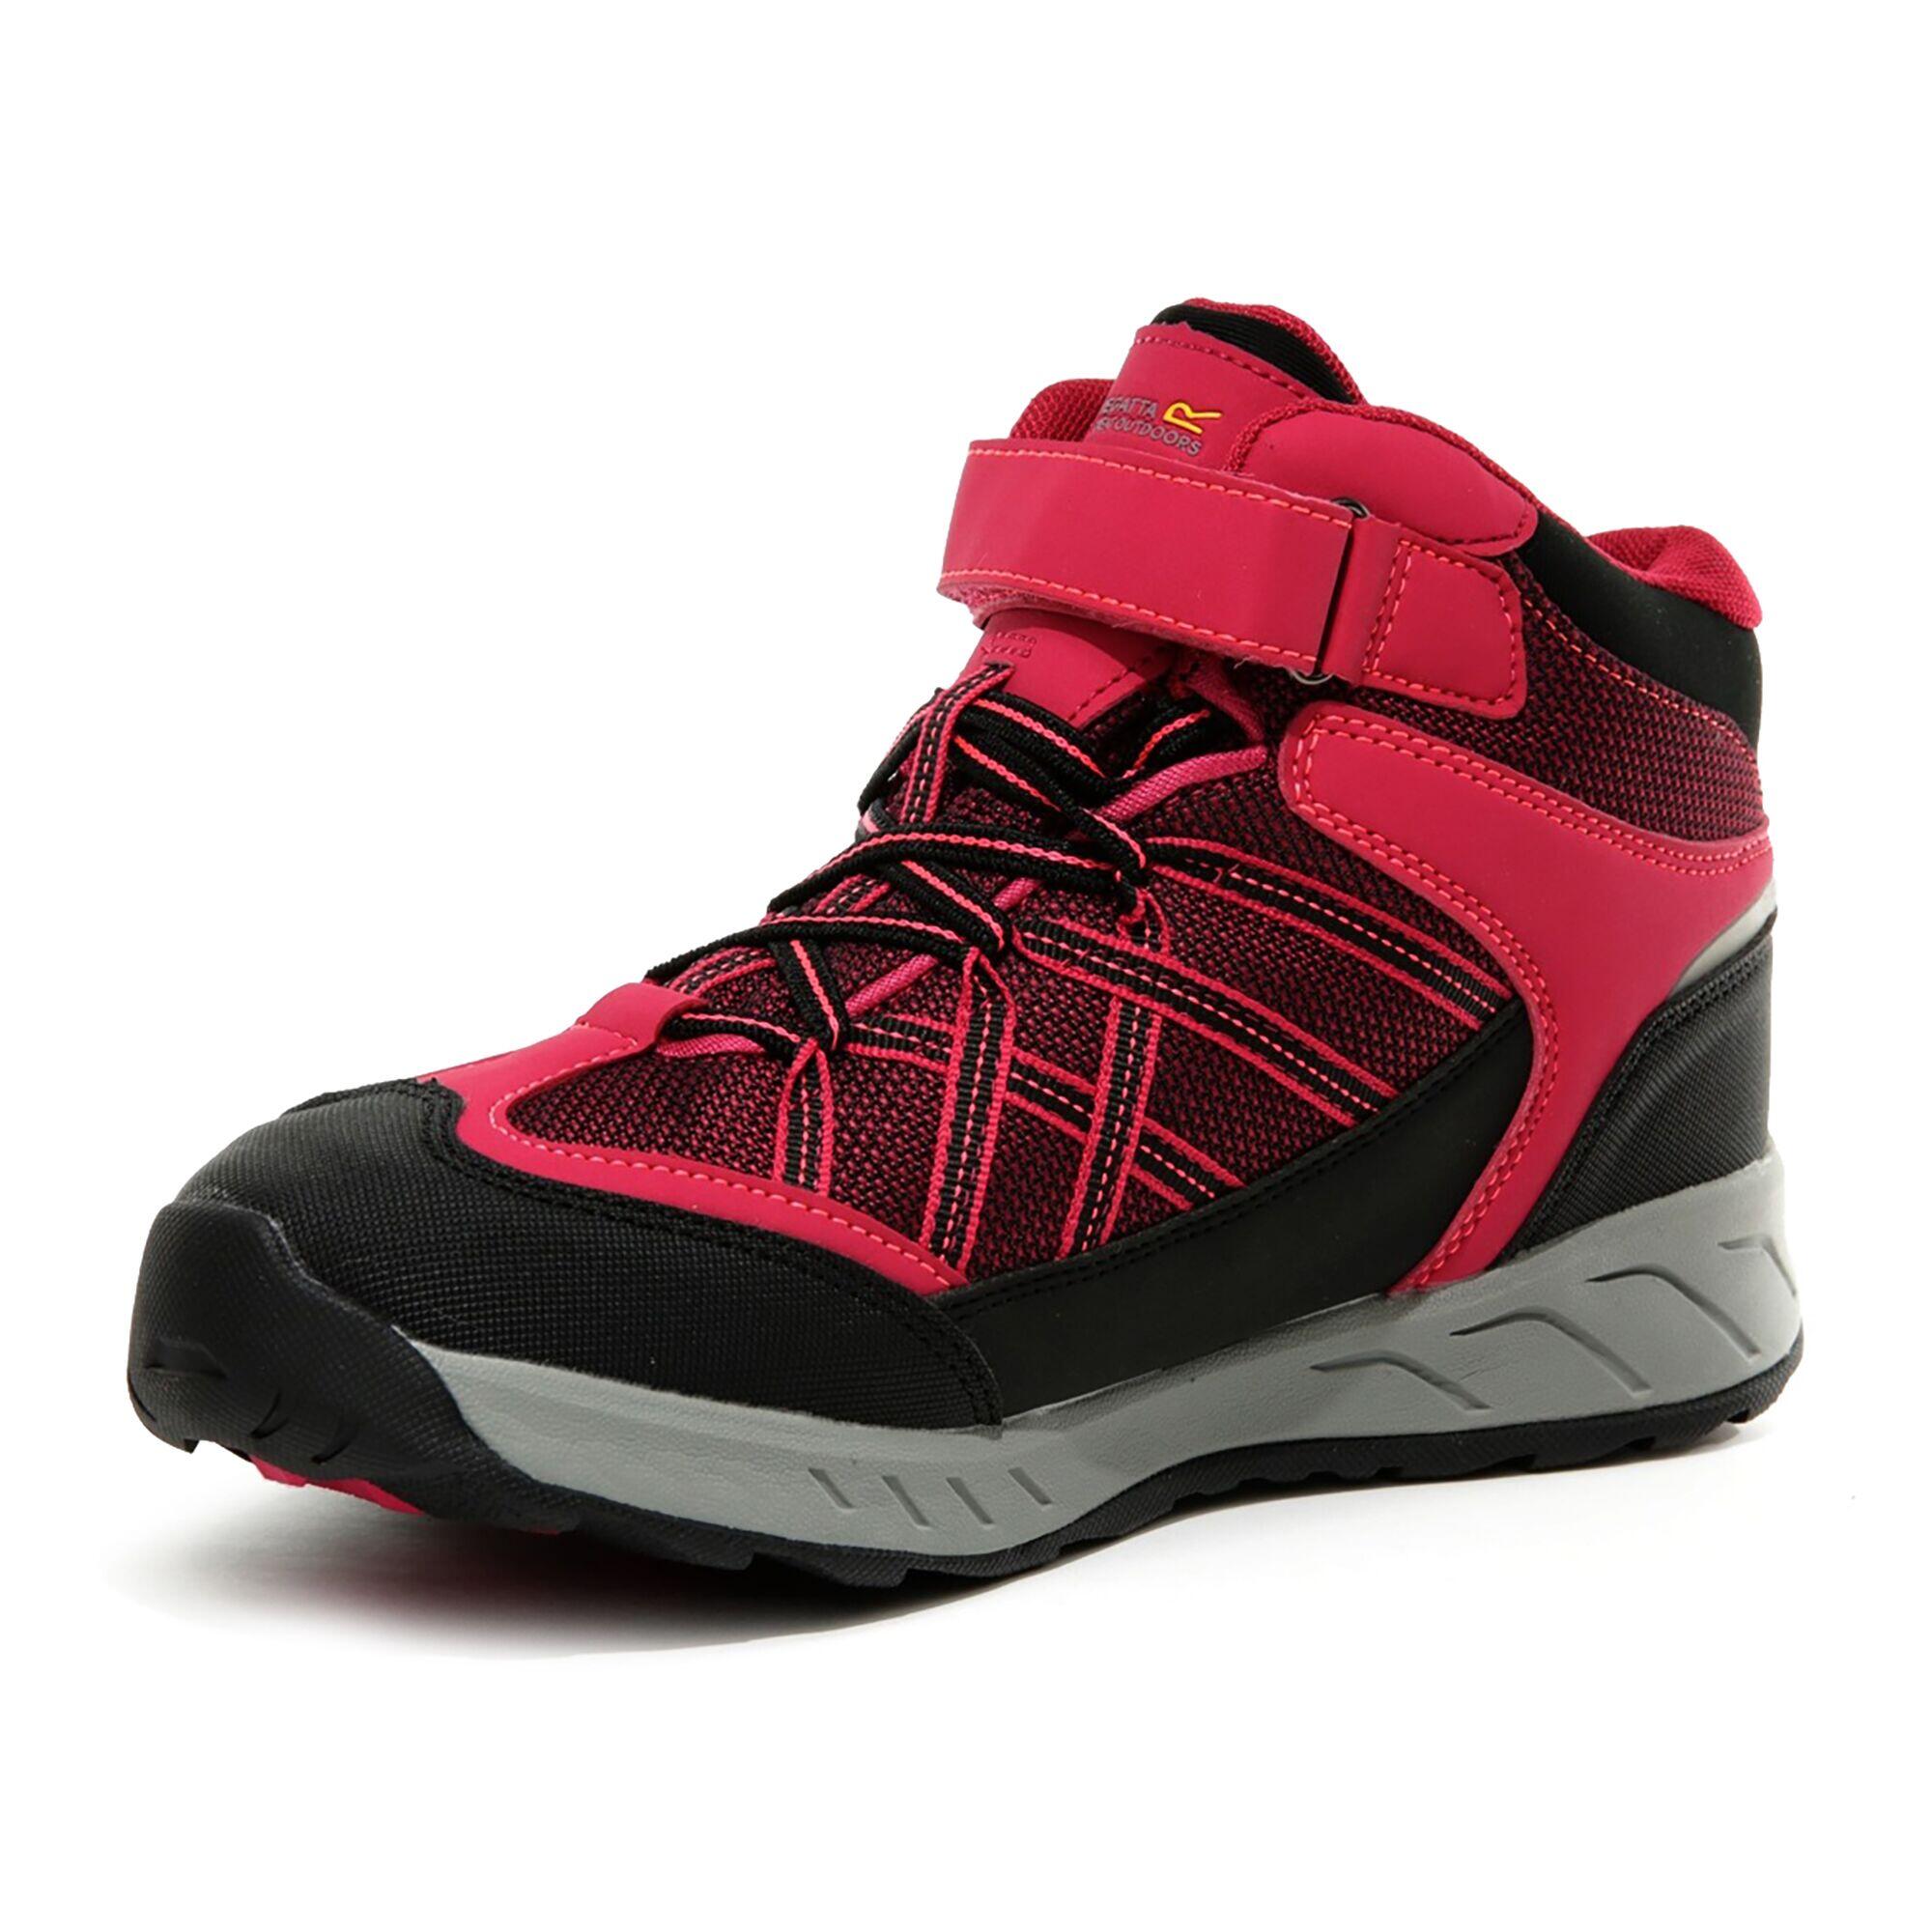 Samaris V Kids' Hiking Waterproof Mid Boots - Cerise/Neon Pink 3/6